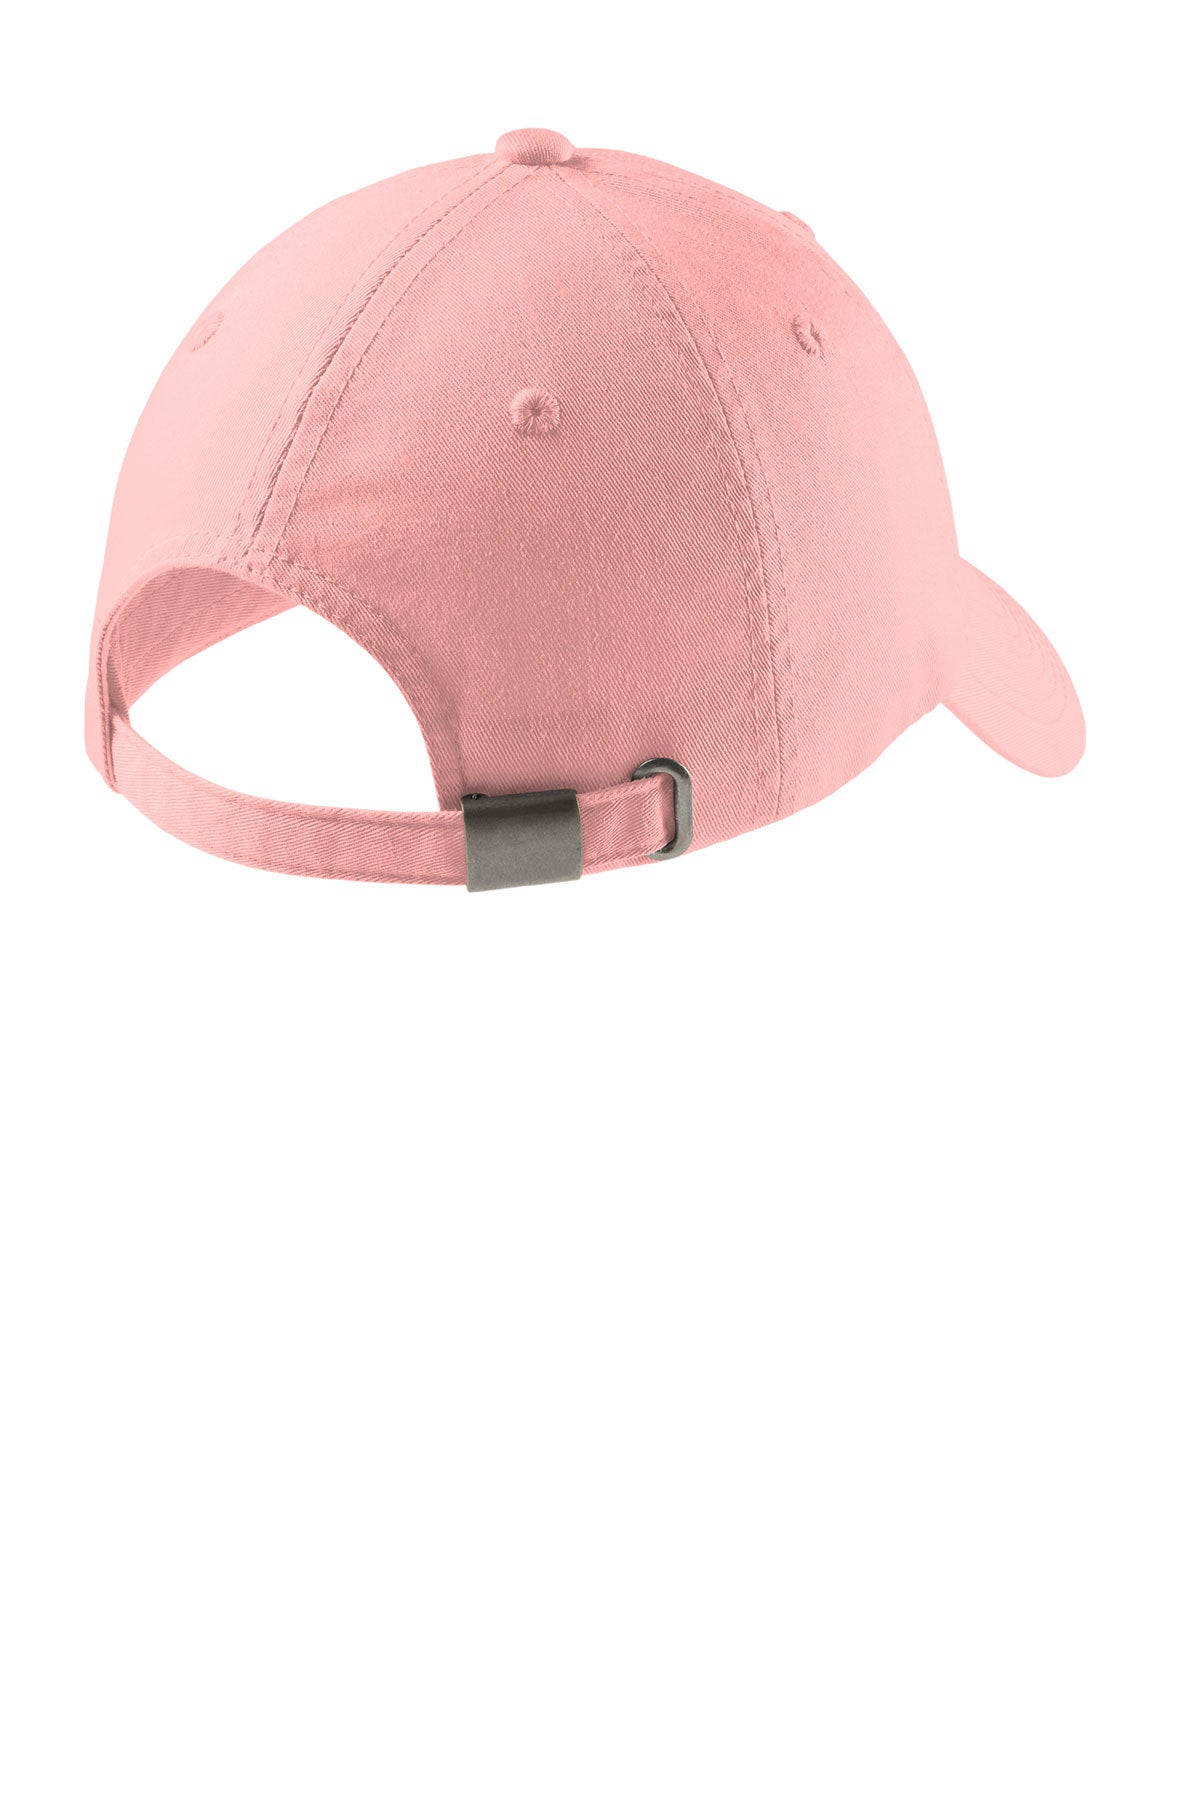 Port Authority Ladies Garment-Washed Custom Caps, Light Pink